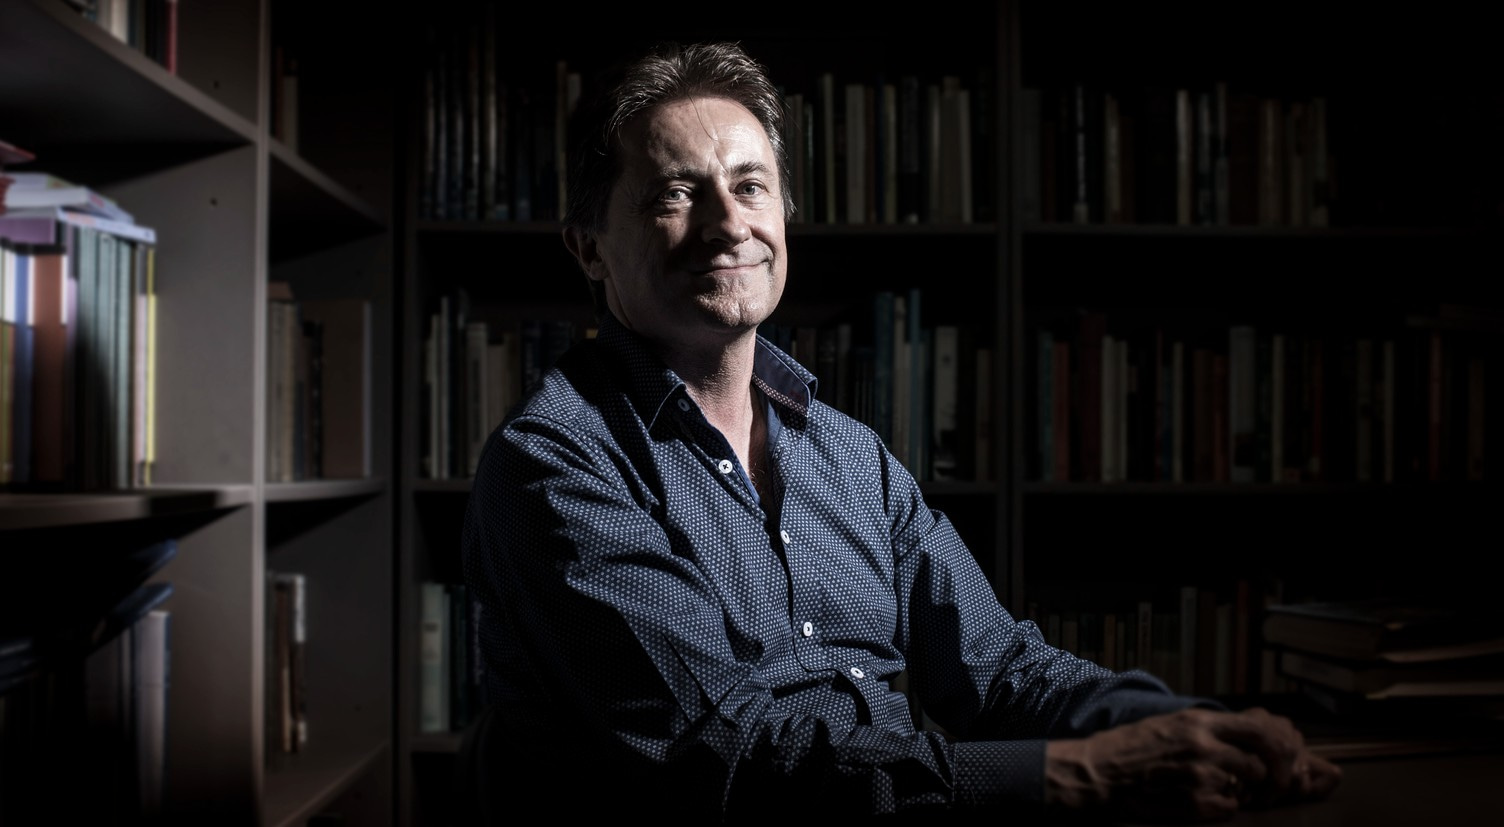 UOW Senior Professor Simon Ville, pictured against a backdrop of book shelves. Photo: Paul Jones